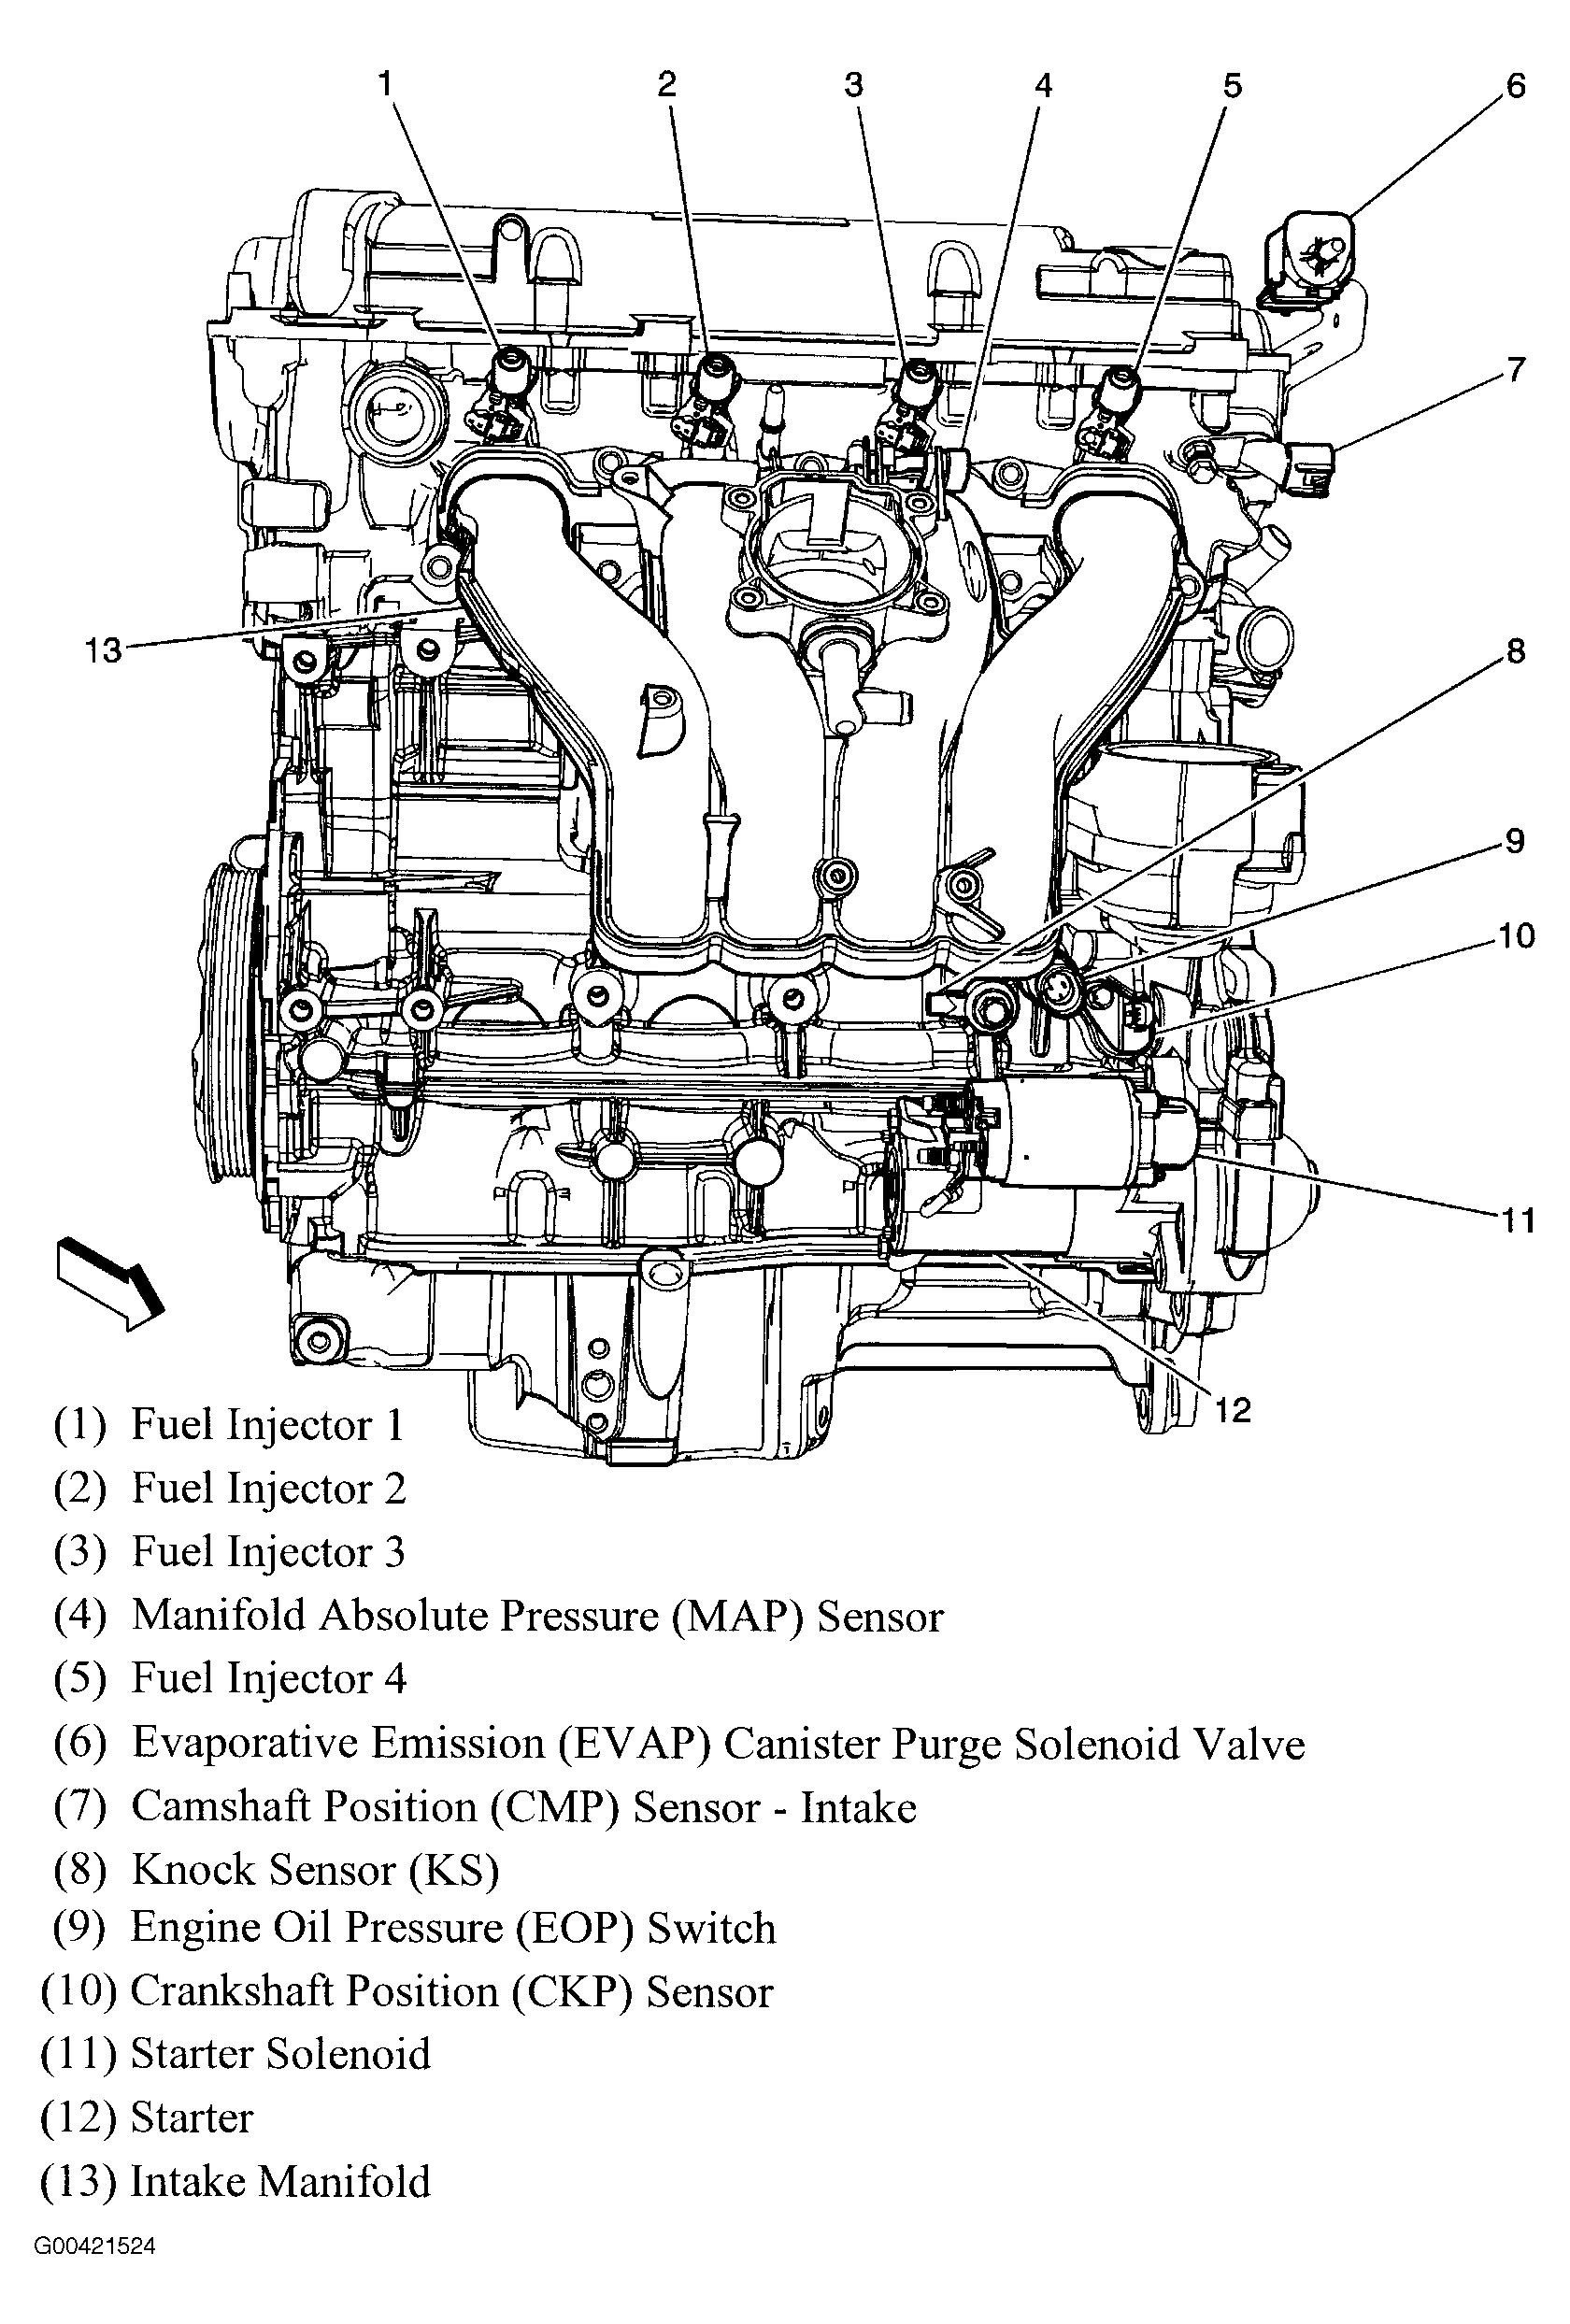 Chevy 350 Engine Diagram Chevrolet Engine Diagrams Wiring Diagram Options Of Chevy 350 Engine Diagram